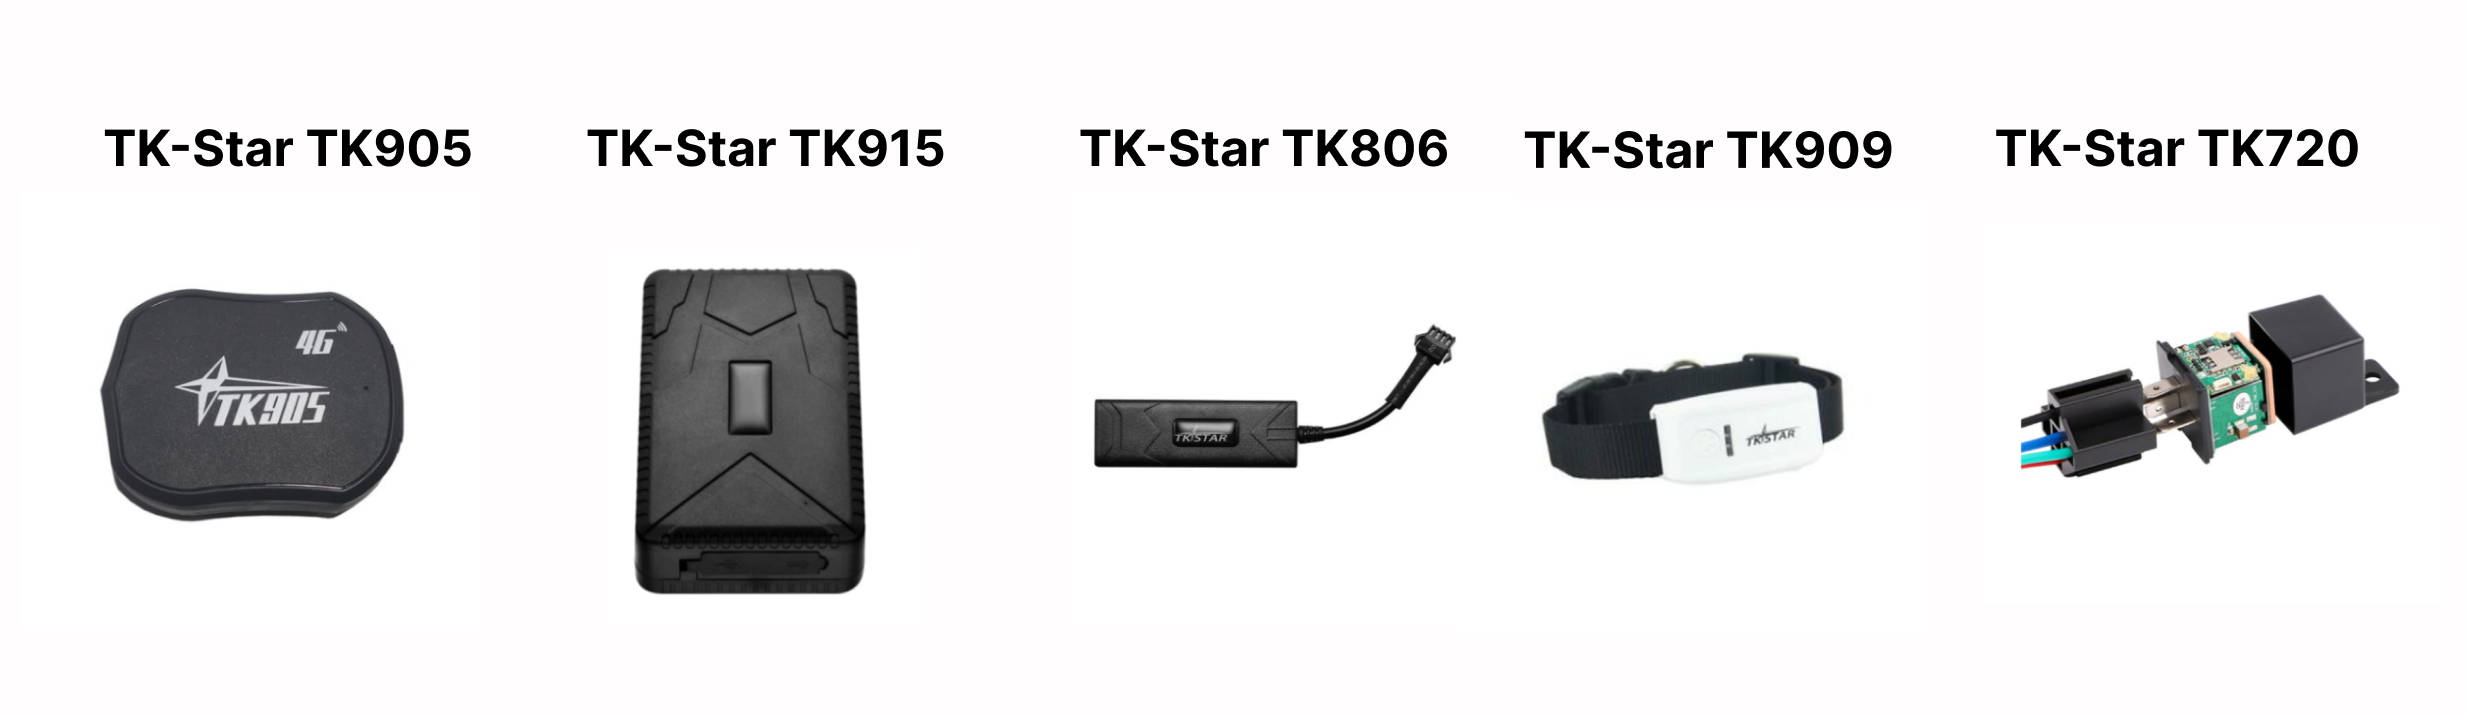 TK Star GPS Trackers